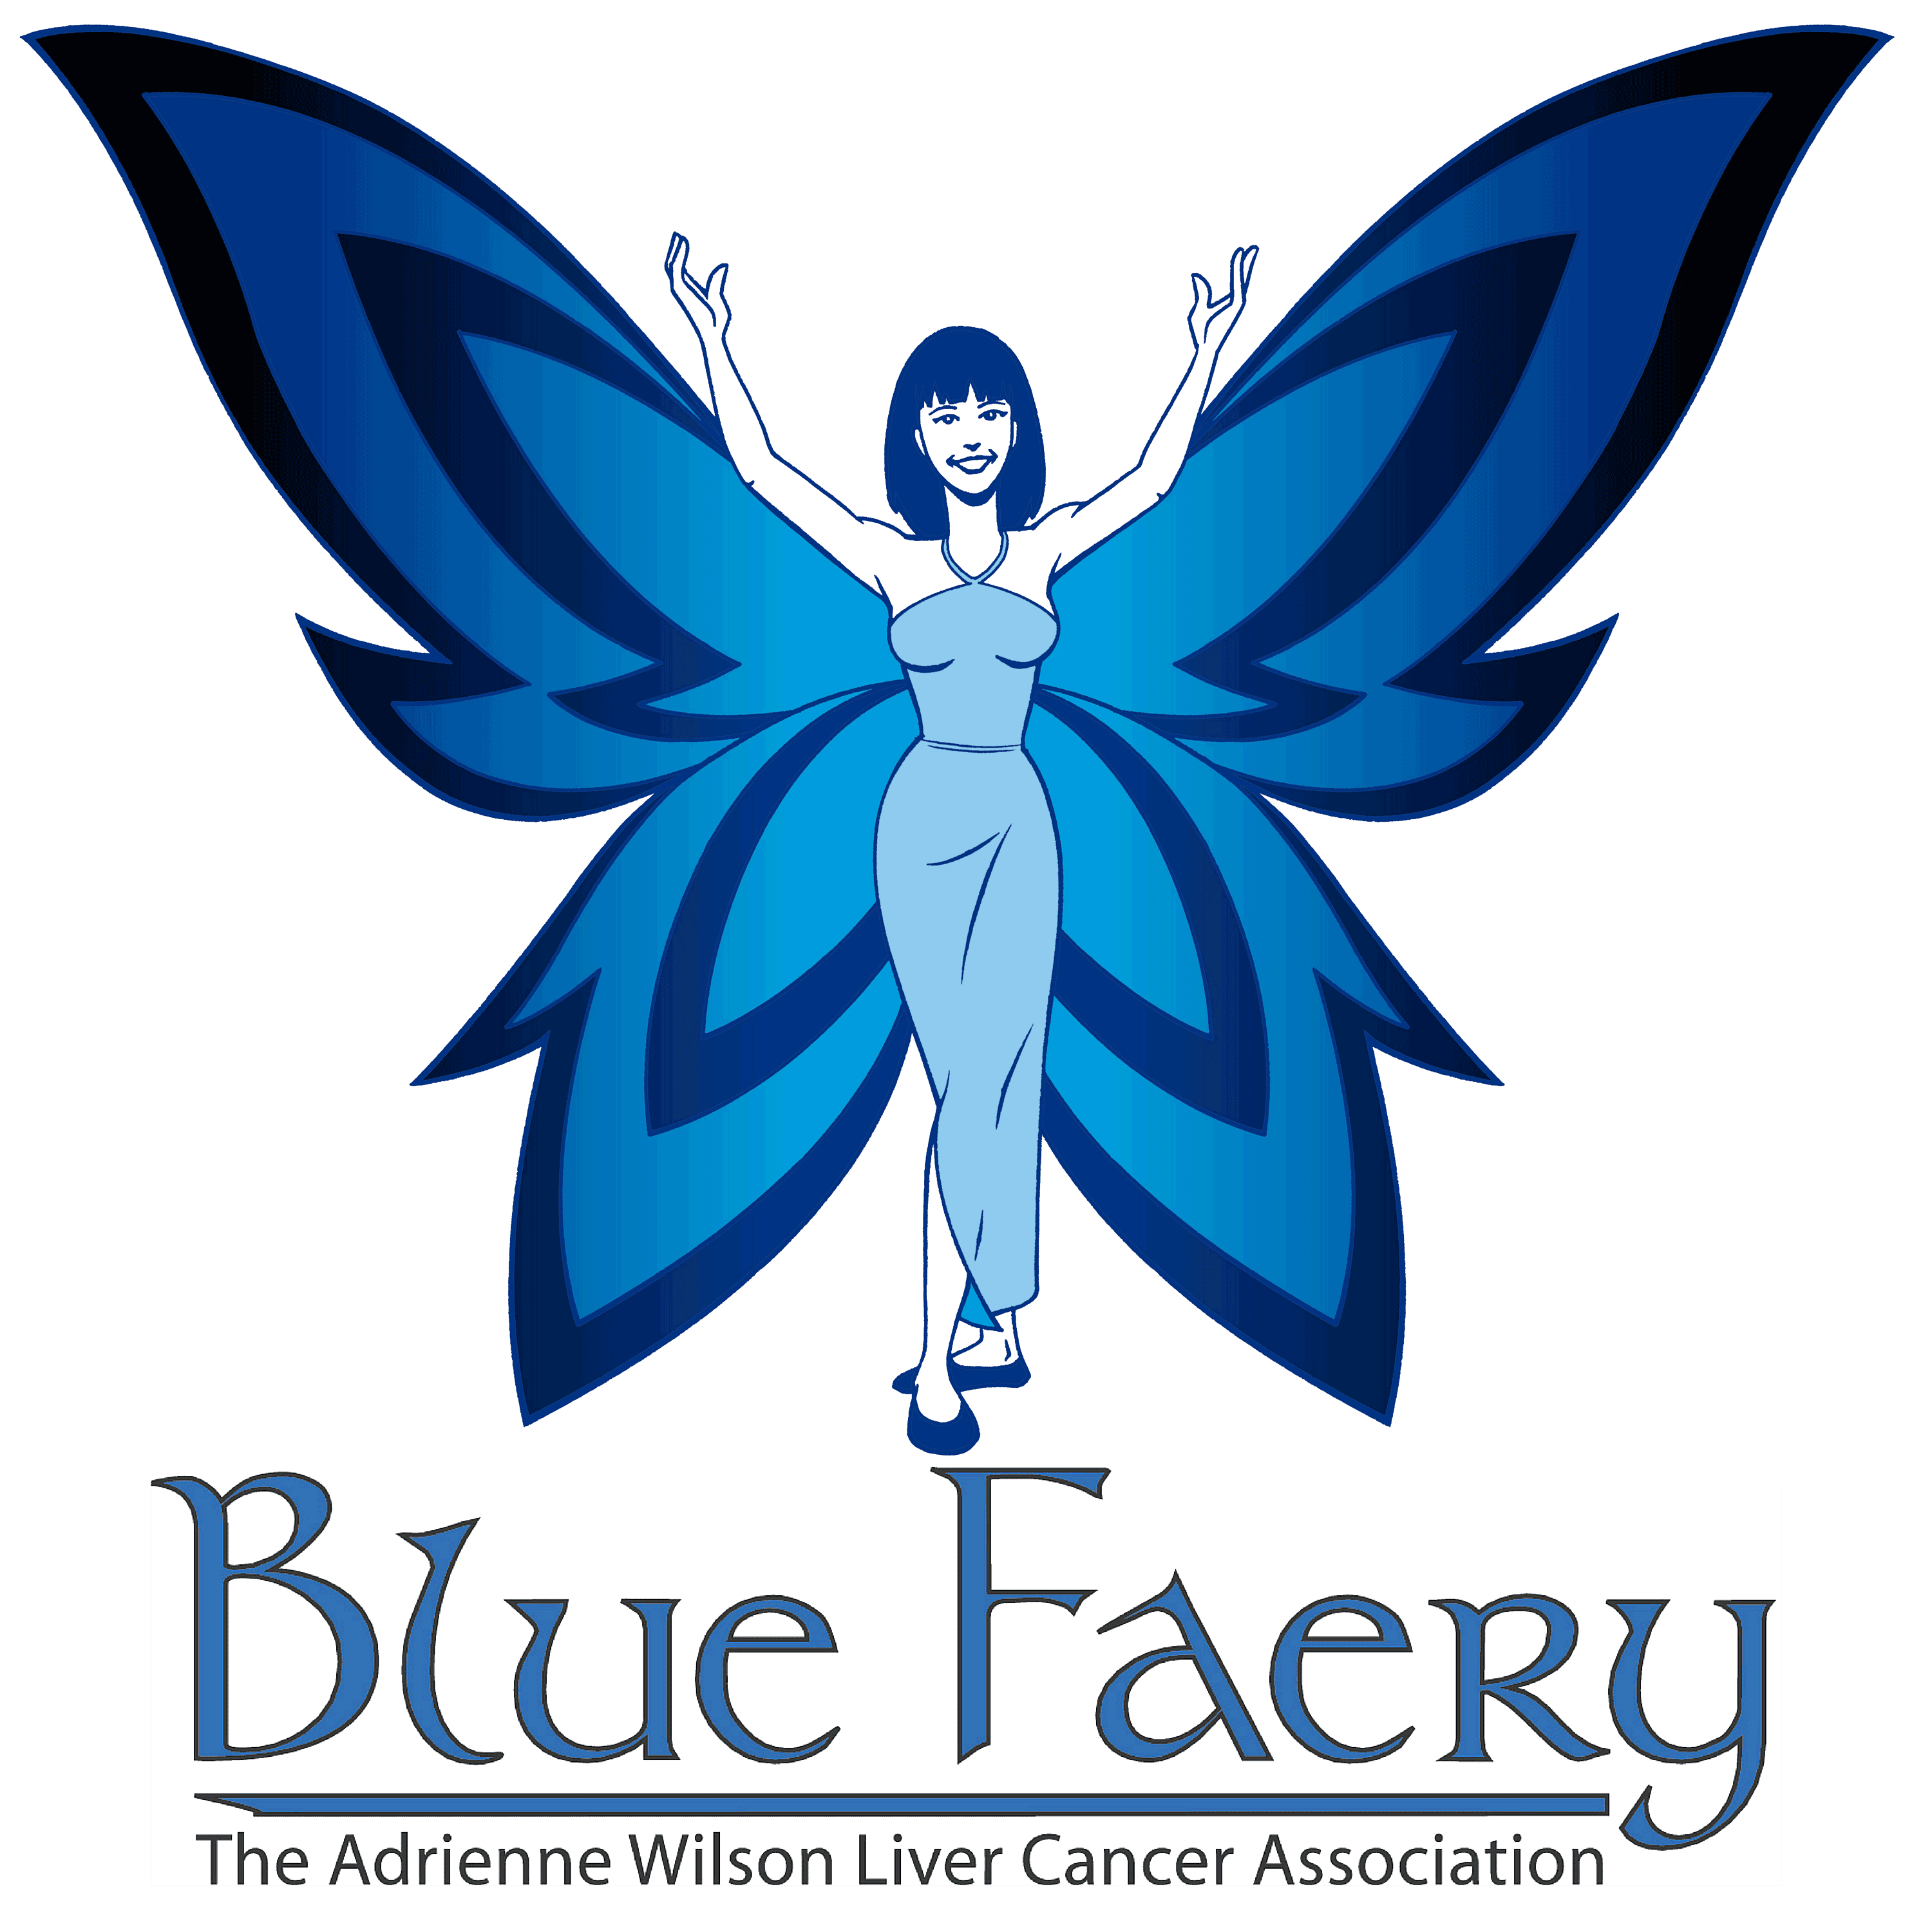 The Blue Faery Logo The Adrienne Wilson Liver Cancer Association